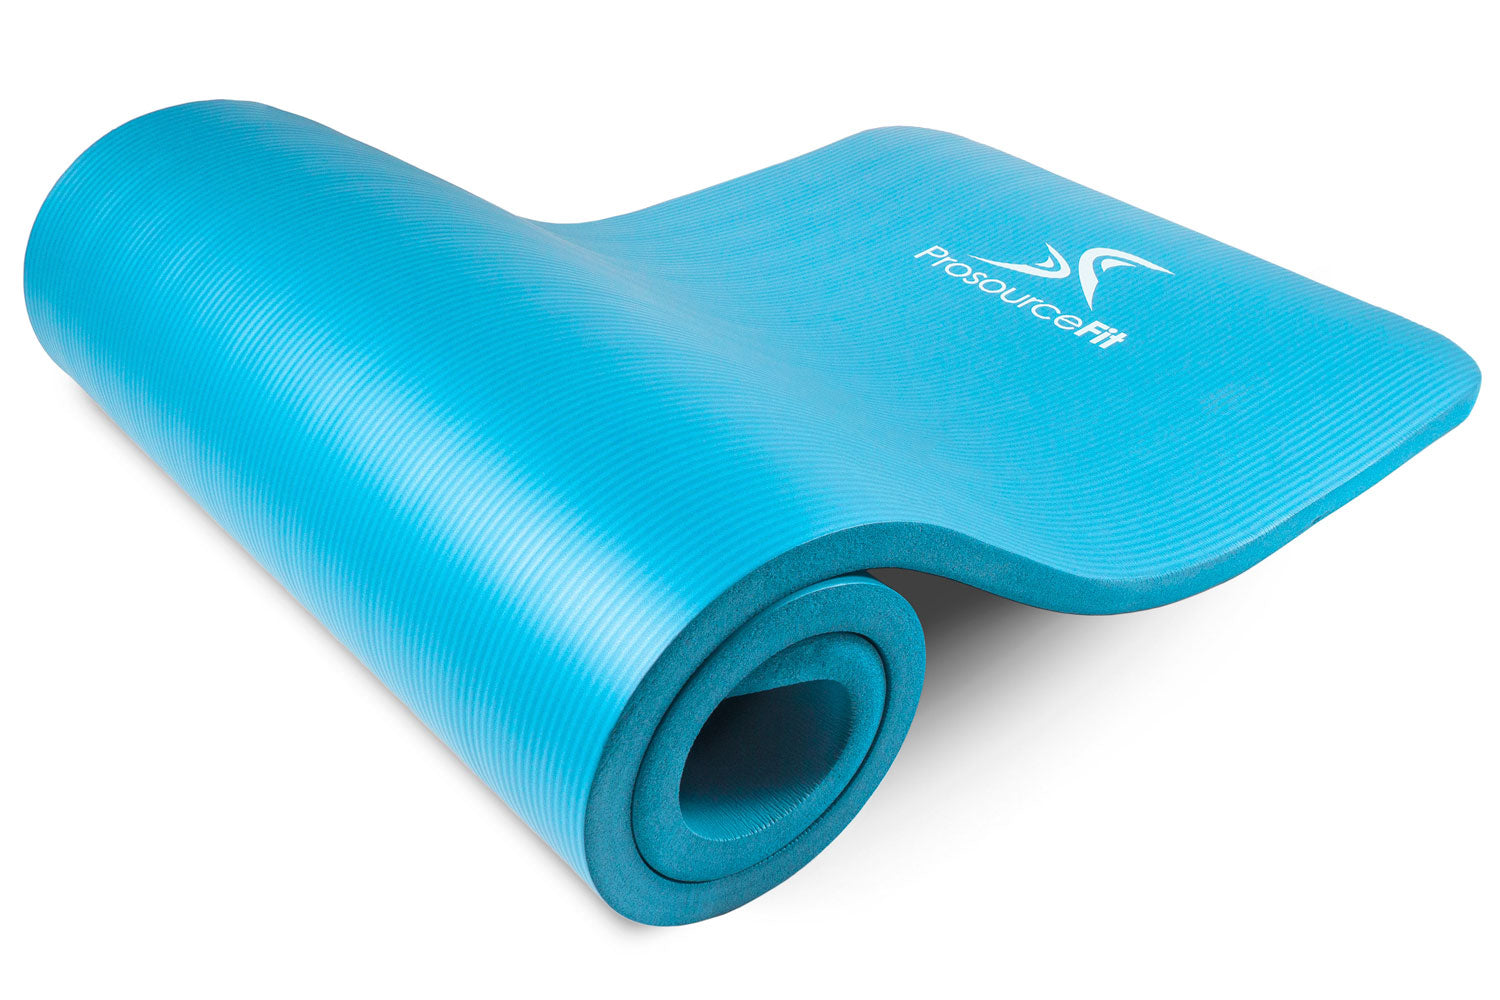 Aqua Extra Thick Yoga and Pilates Mat 1 inch